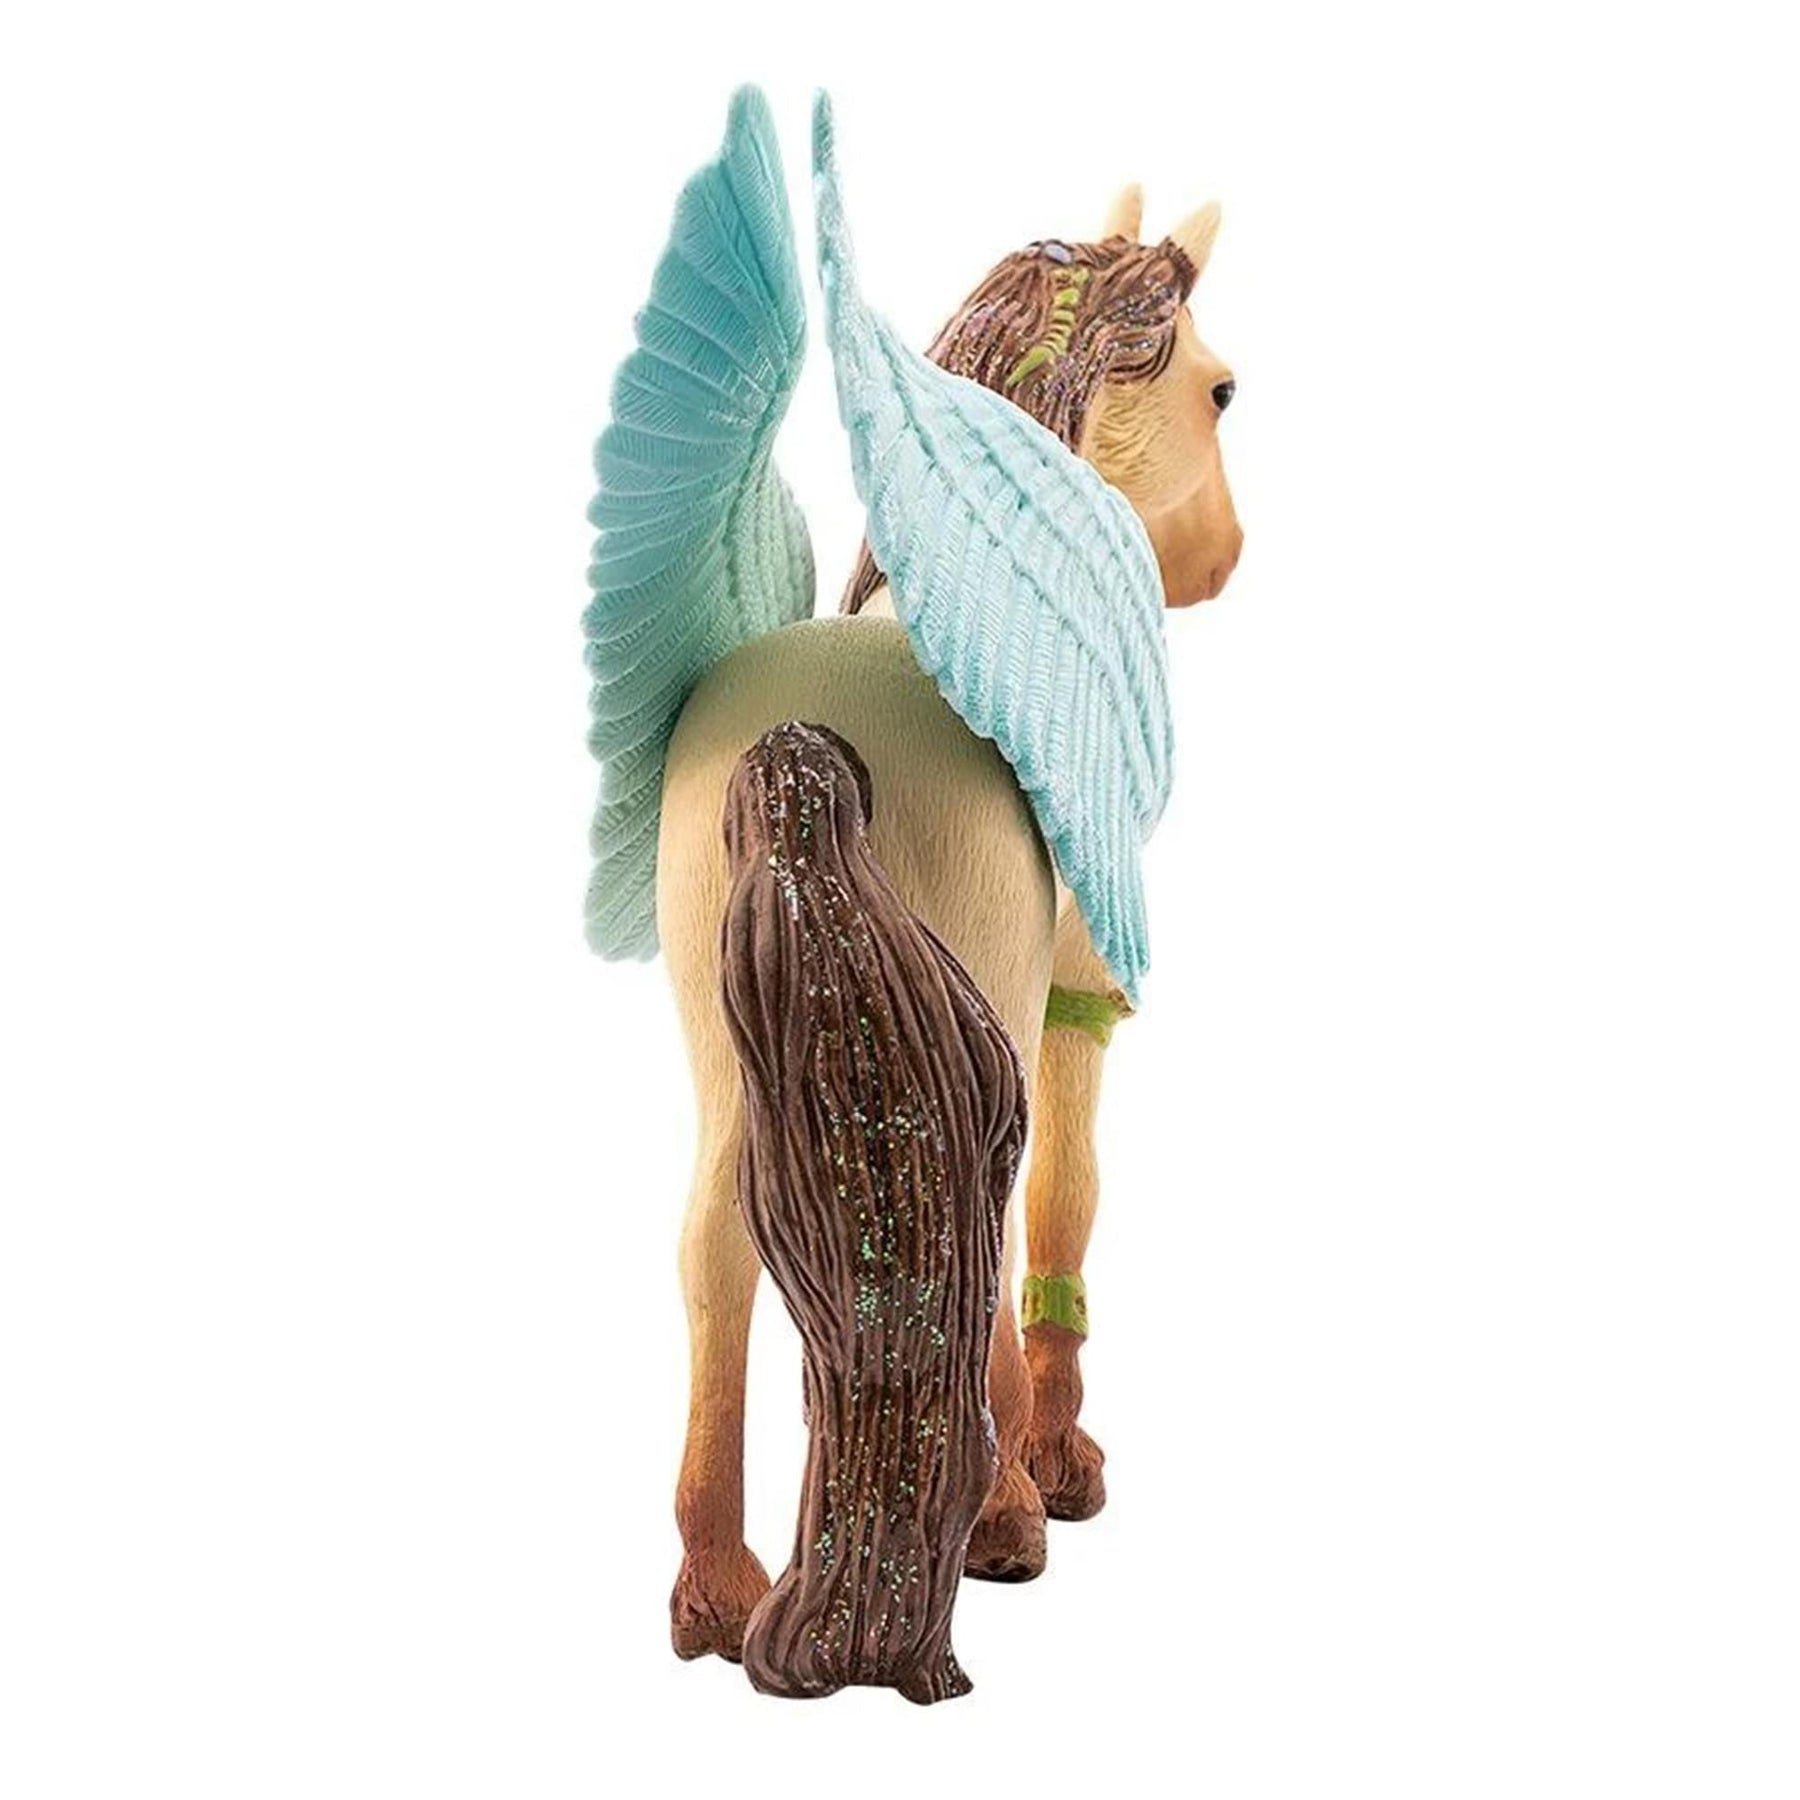 Schleich Decorated Pegasus Stallion Figure | 5.9 x 3.2 x 7.1 Inches